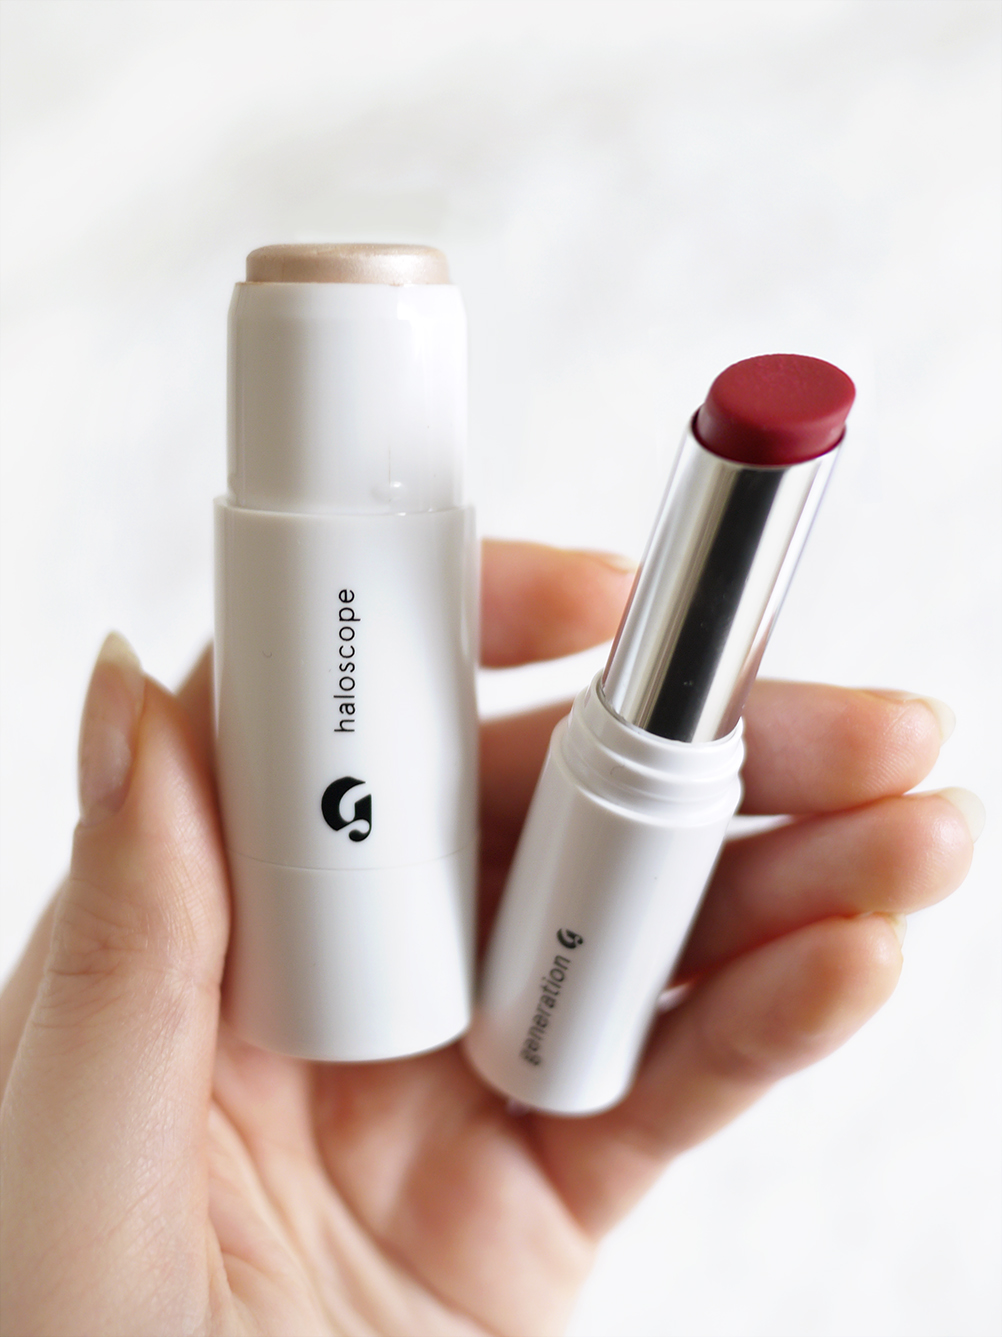 Glossier Review - Haloscope and Generation G Lipstick | Sara du Jour